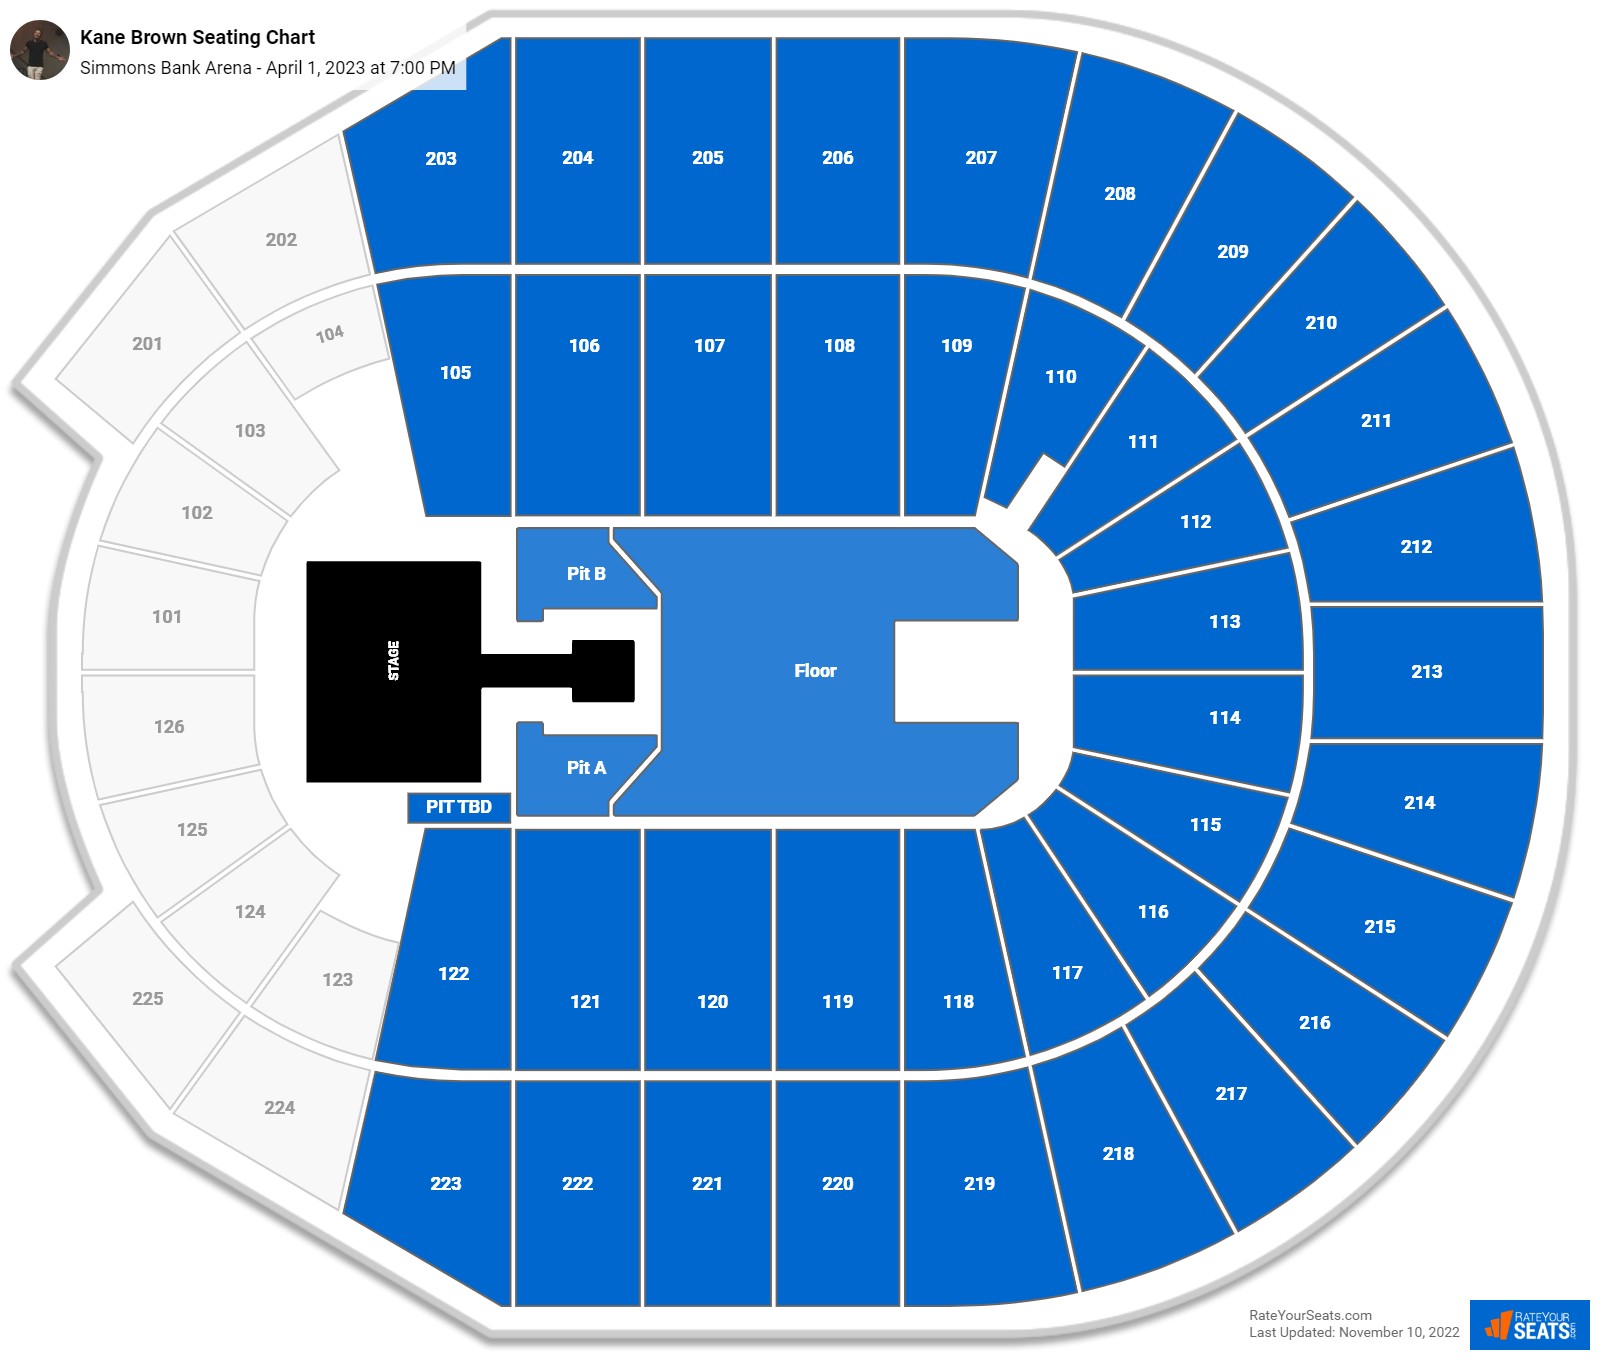 Simmons Bank Arena Seating Chart - RateYourSeats.com